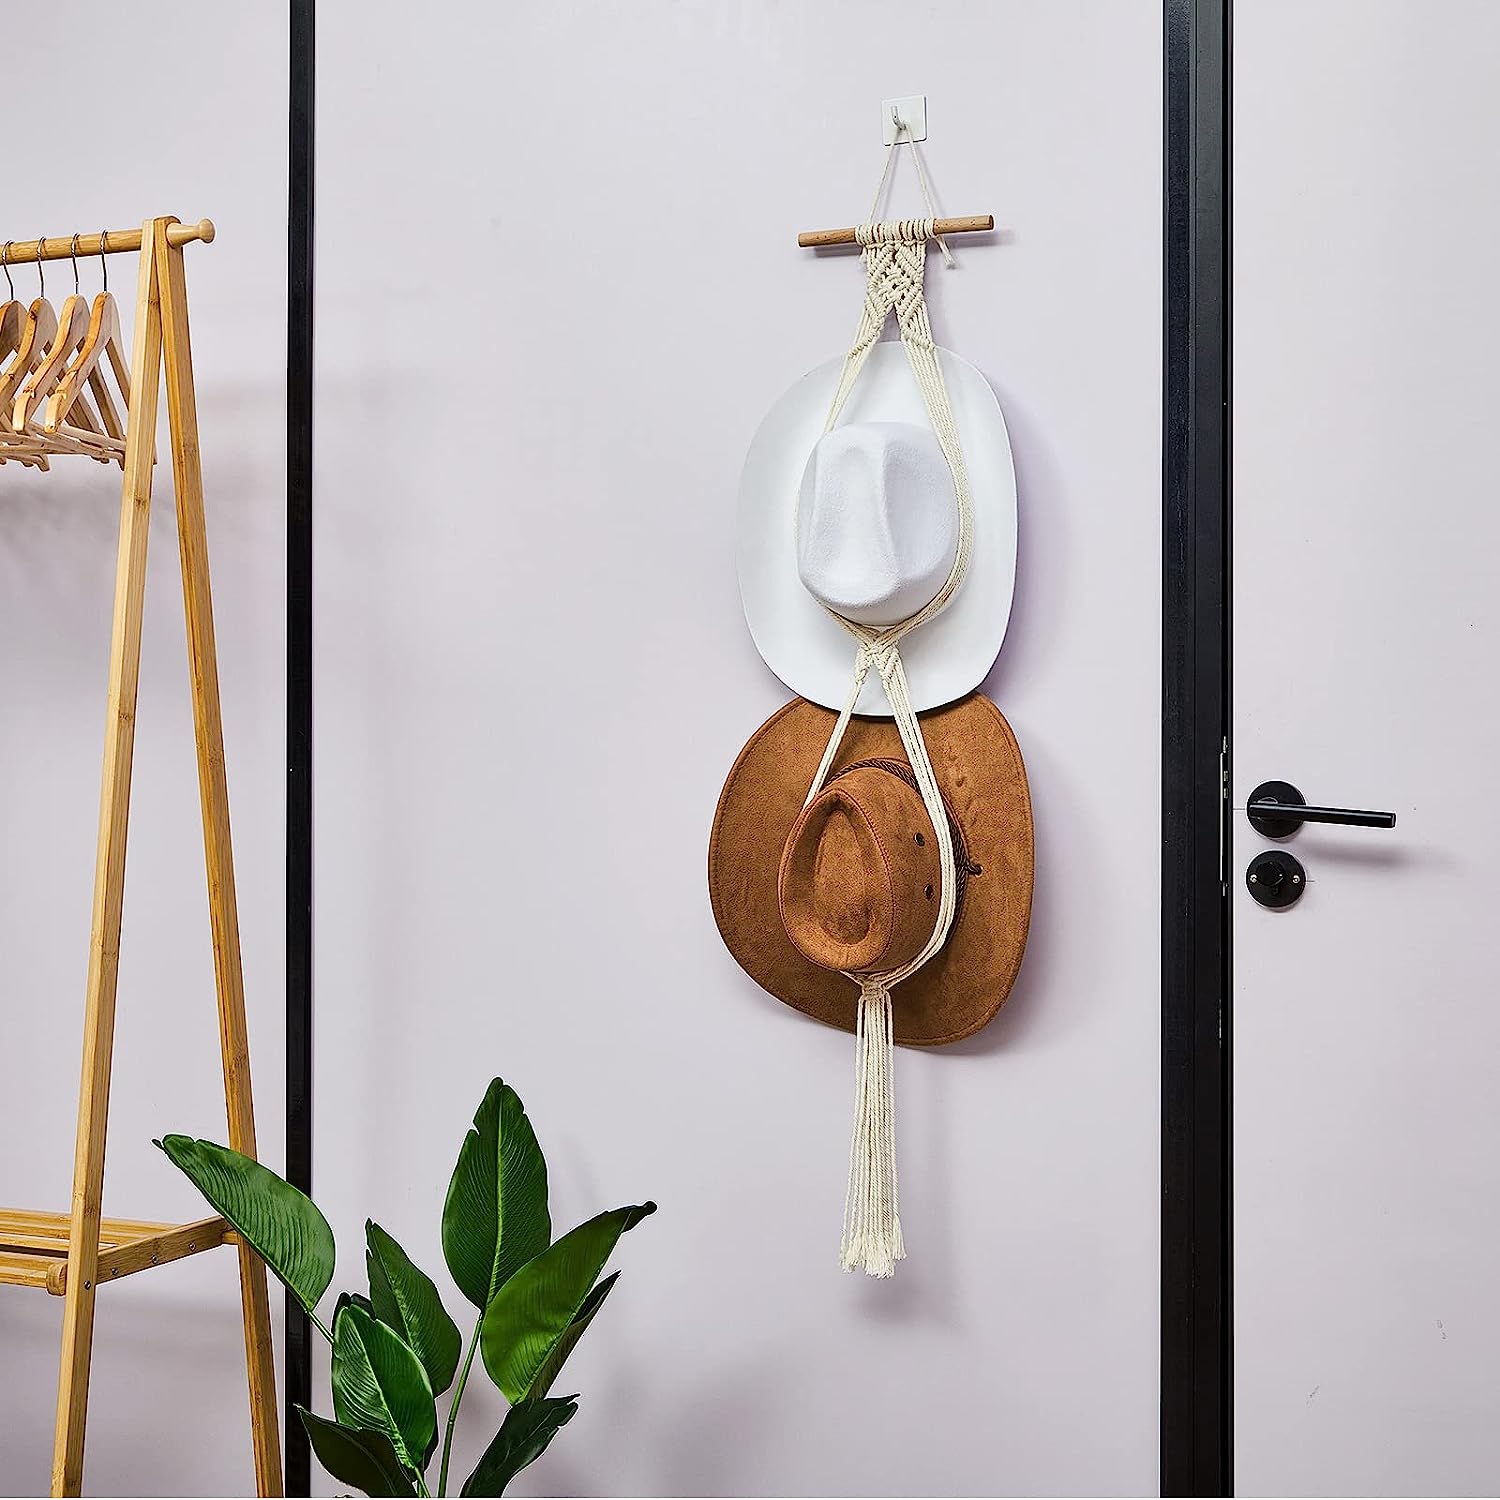 ❤️Handmade Linen Decorative Boho Hat Rack For Wall Hanging